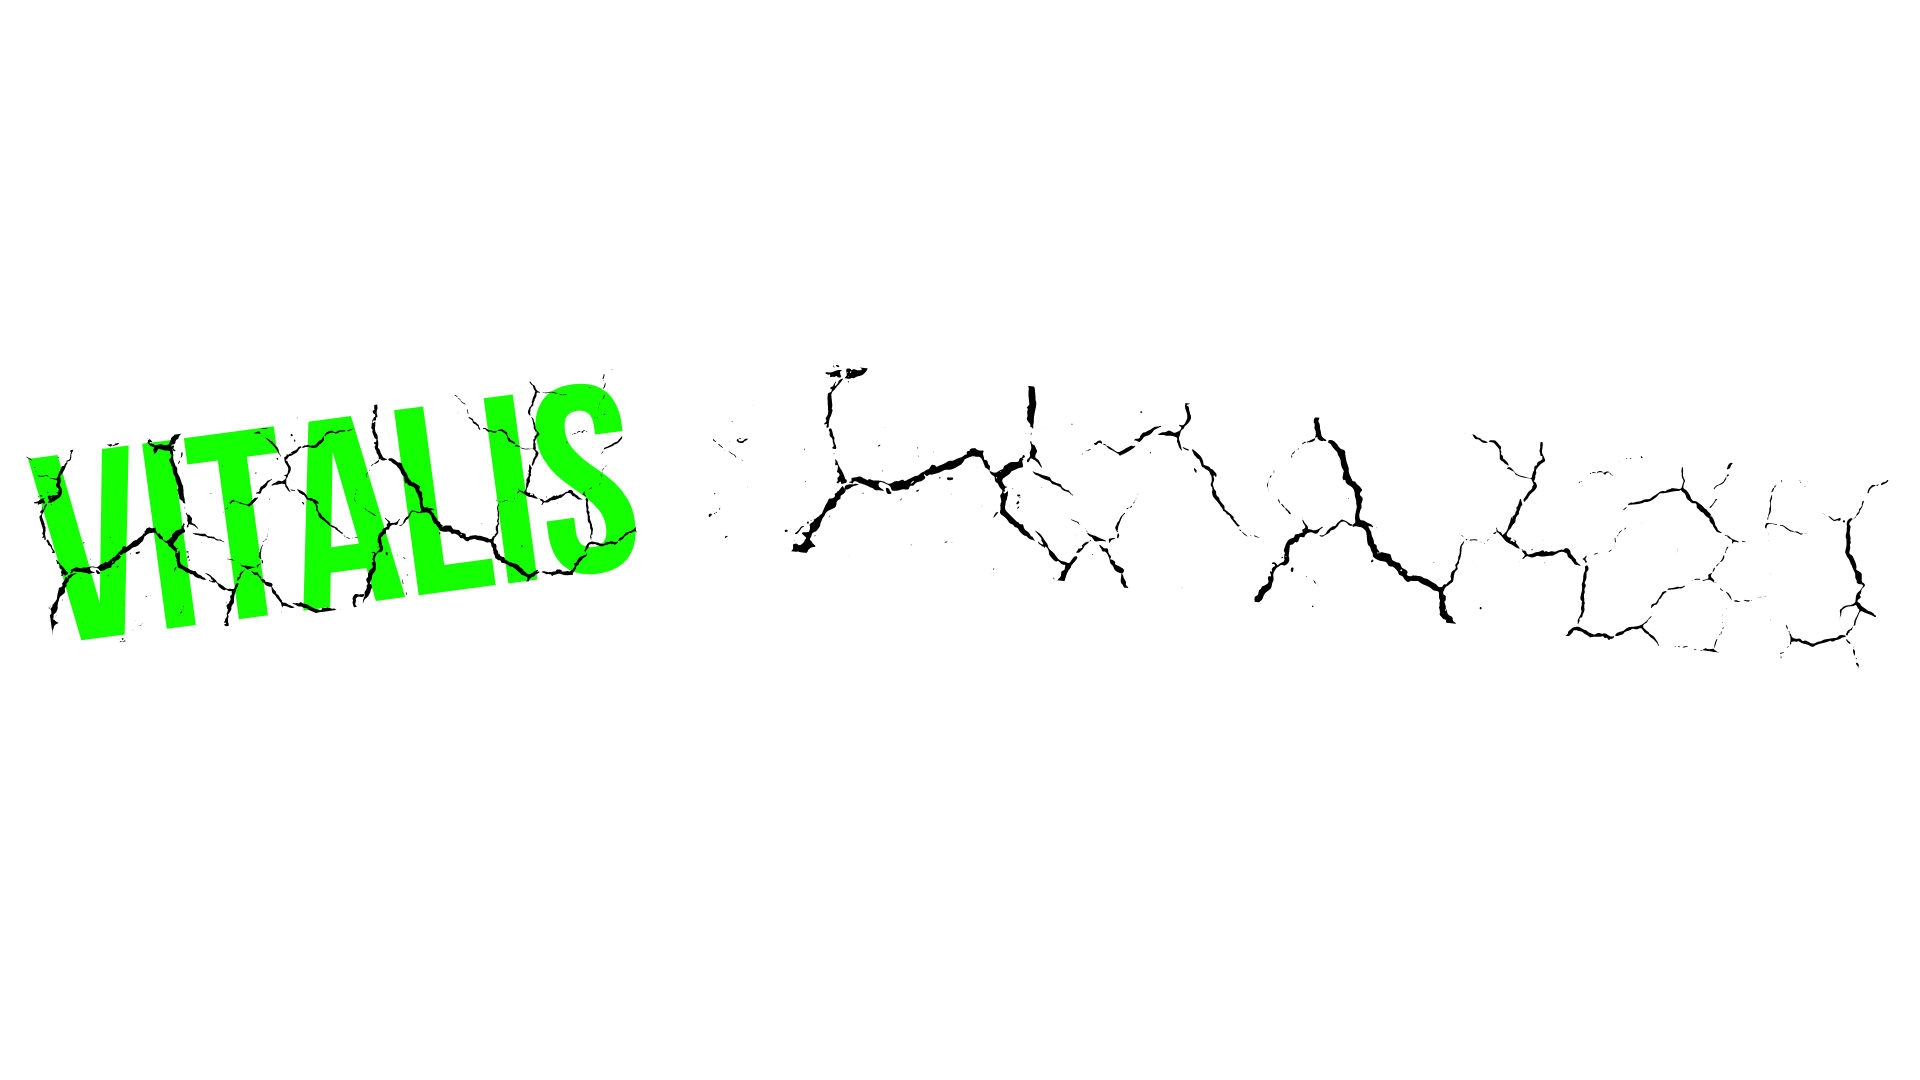 Vitalis Laboratories inc.